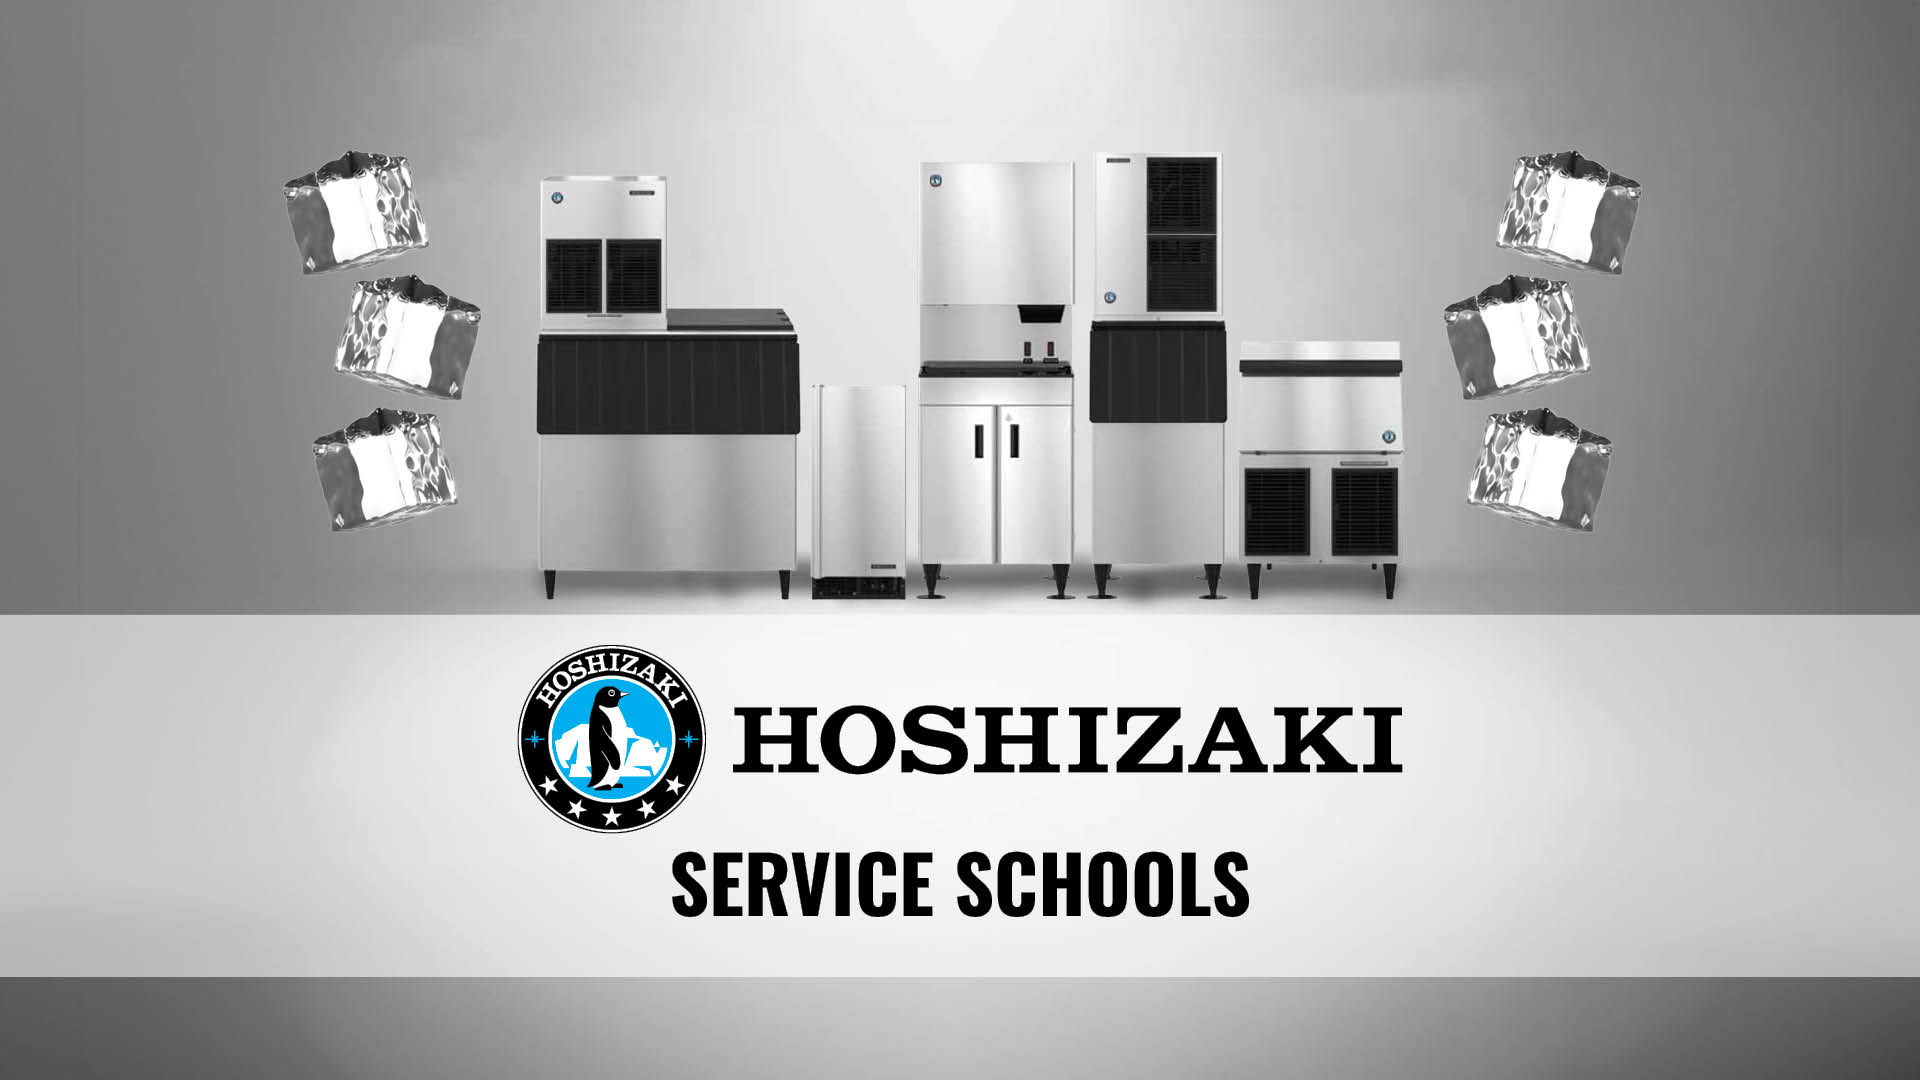 Hoshizaki Service Schools in Winnipeg